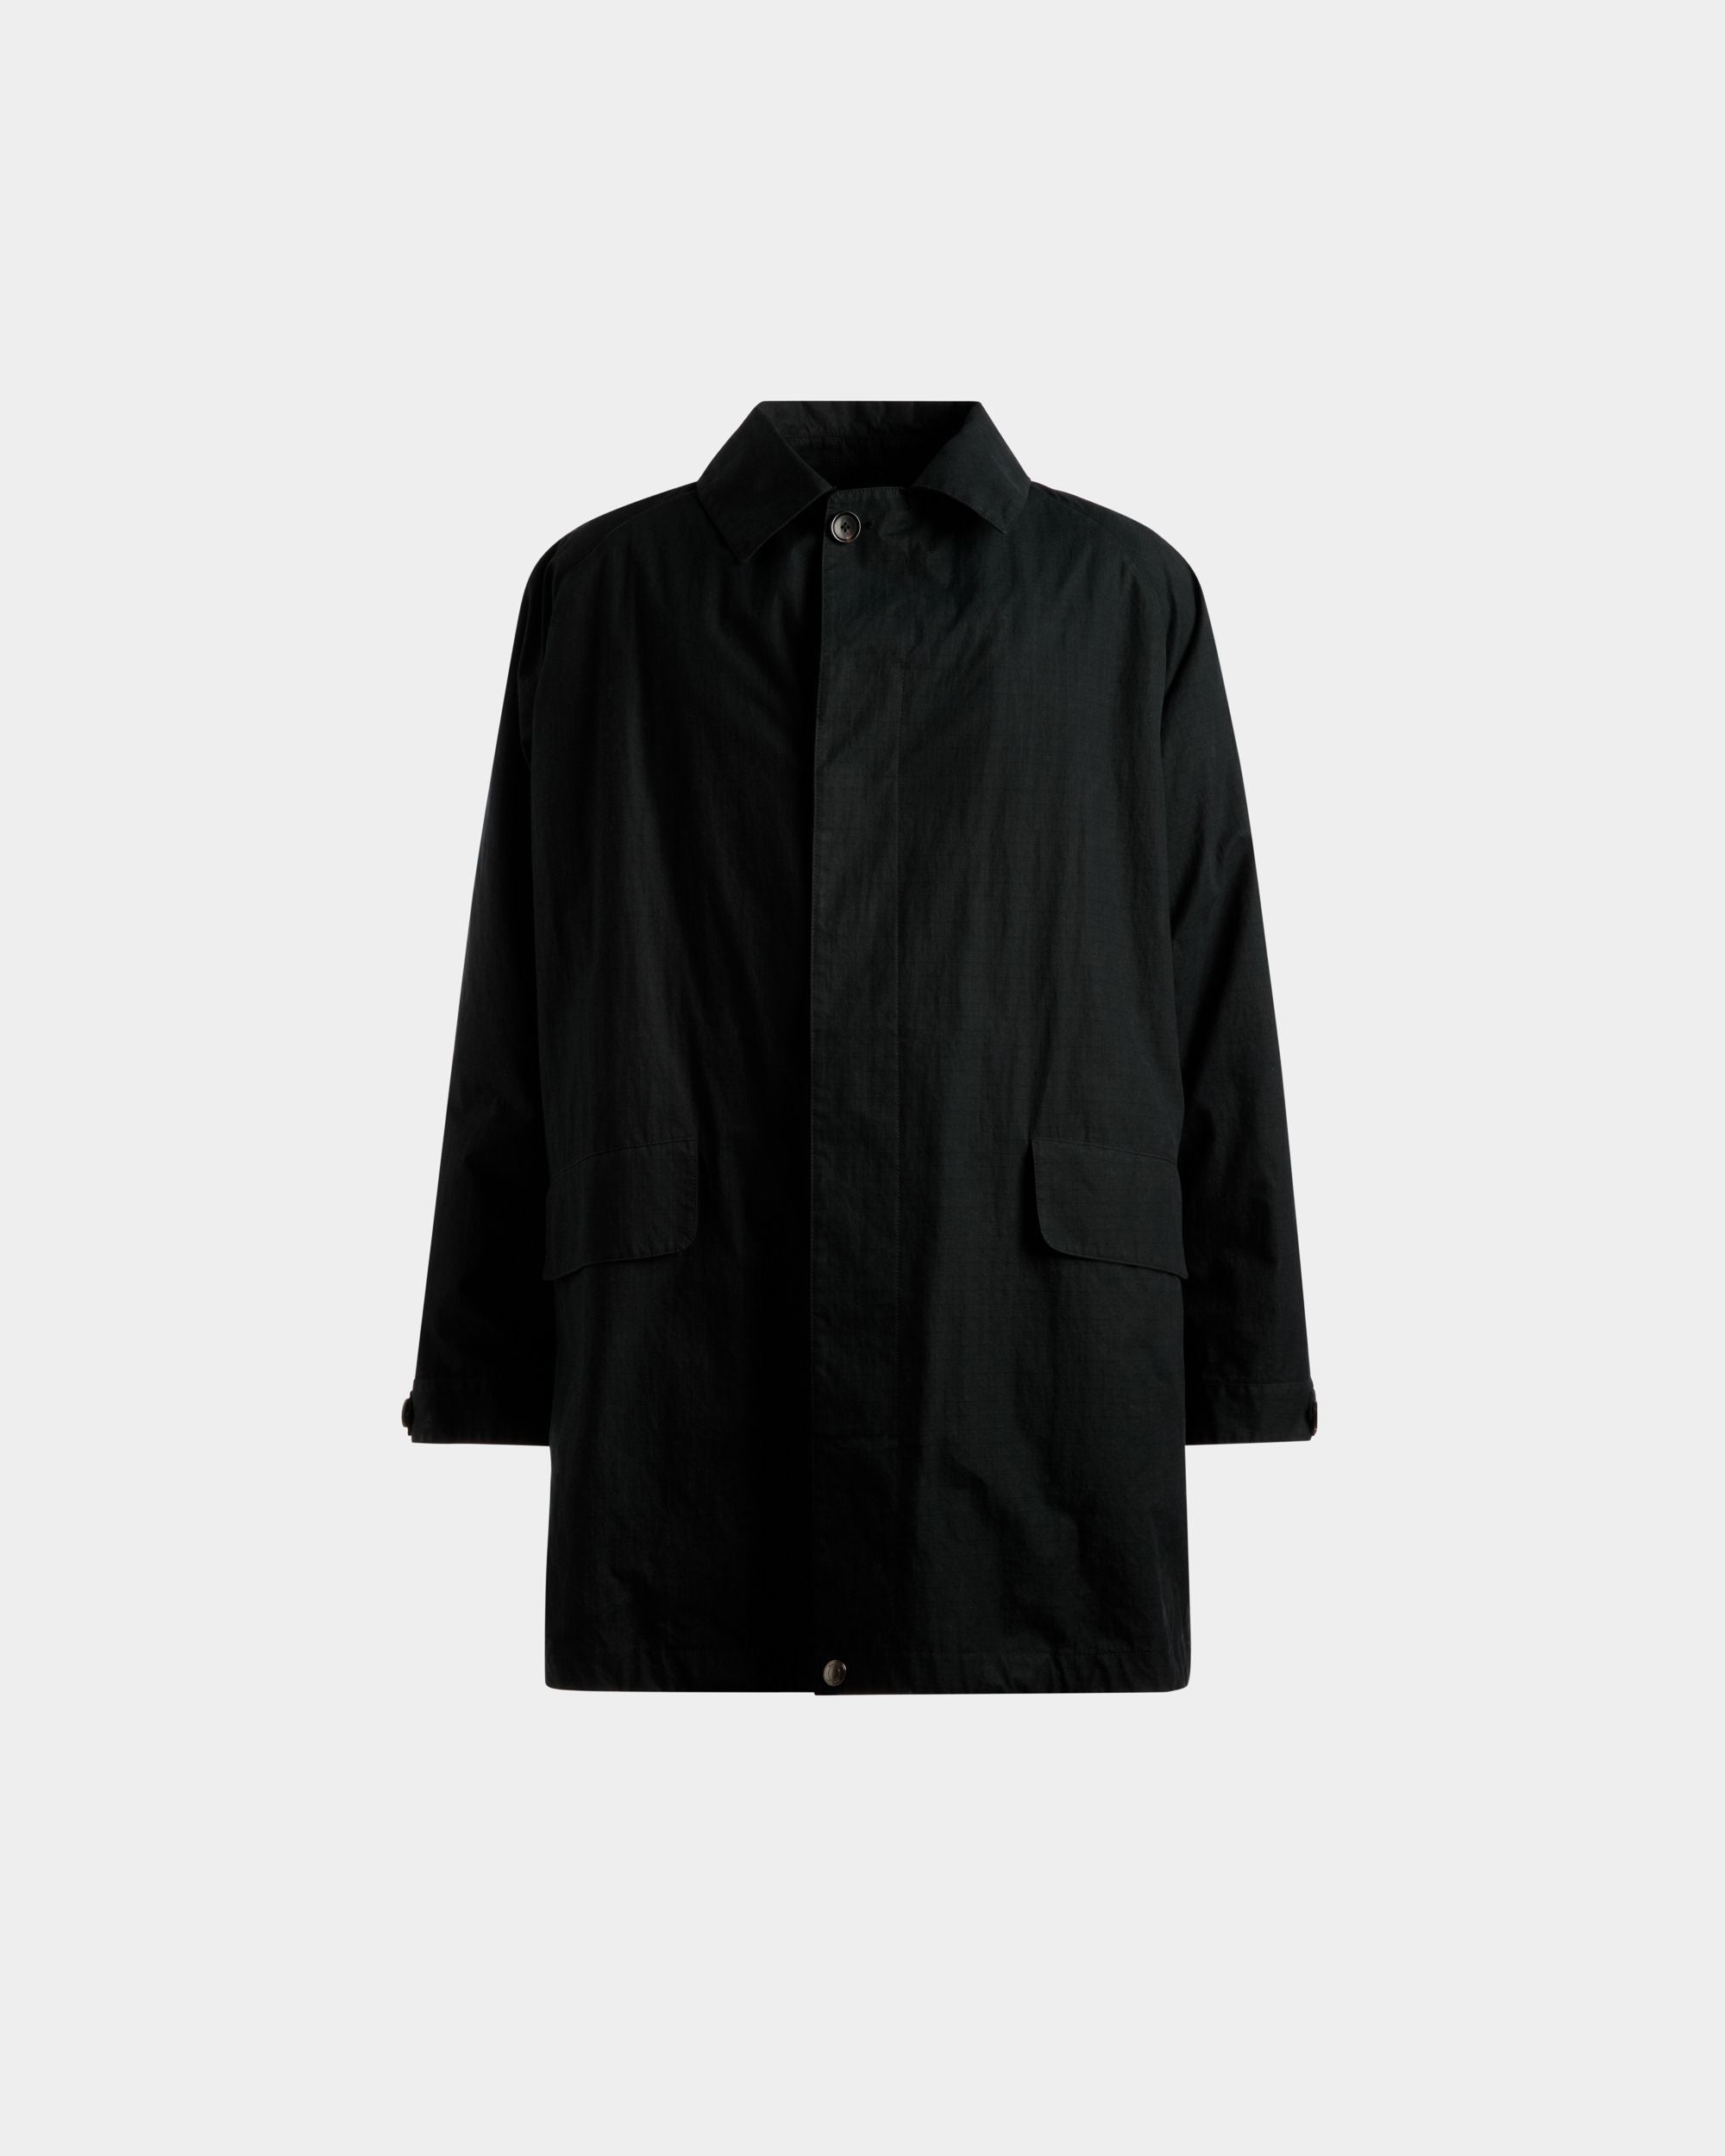 Duster Coat | Men's Coat | Black Polyamide | Bally | Still Life Front